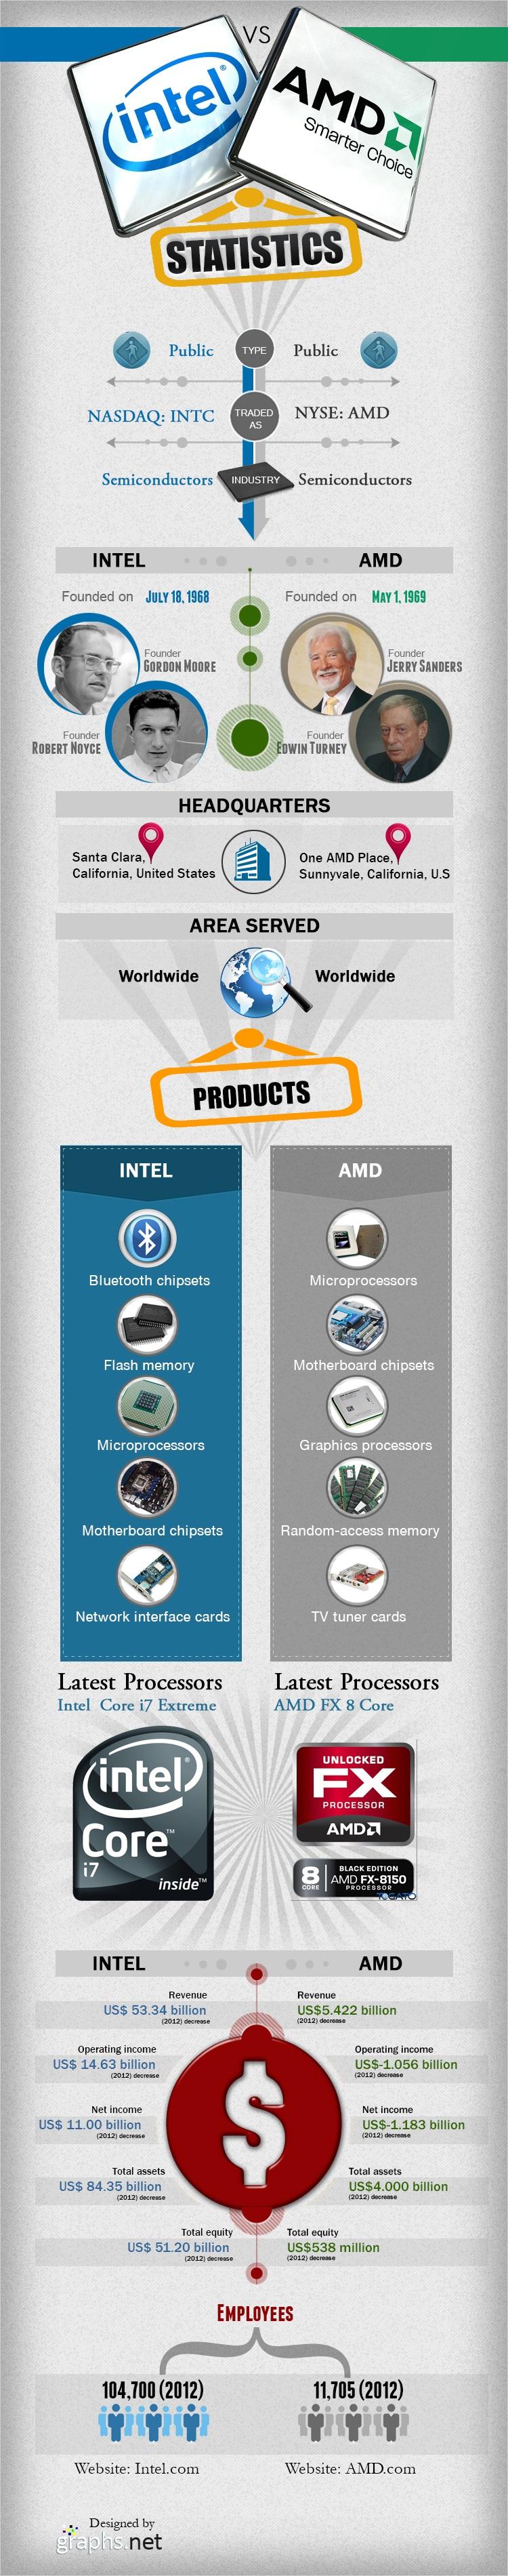 Intel vs AMD #Infografía #Tecnología #Intel #AMD